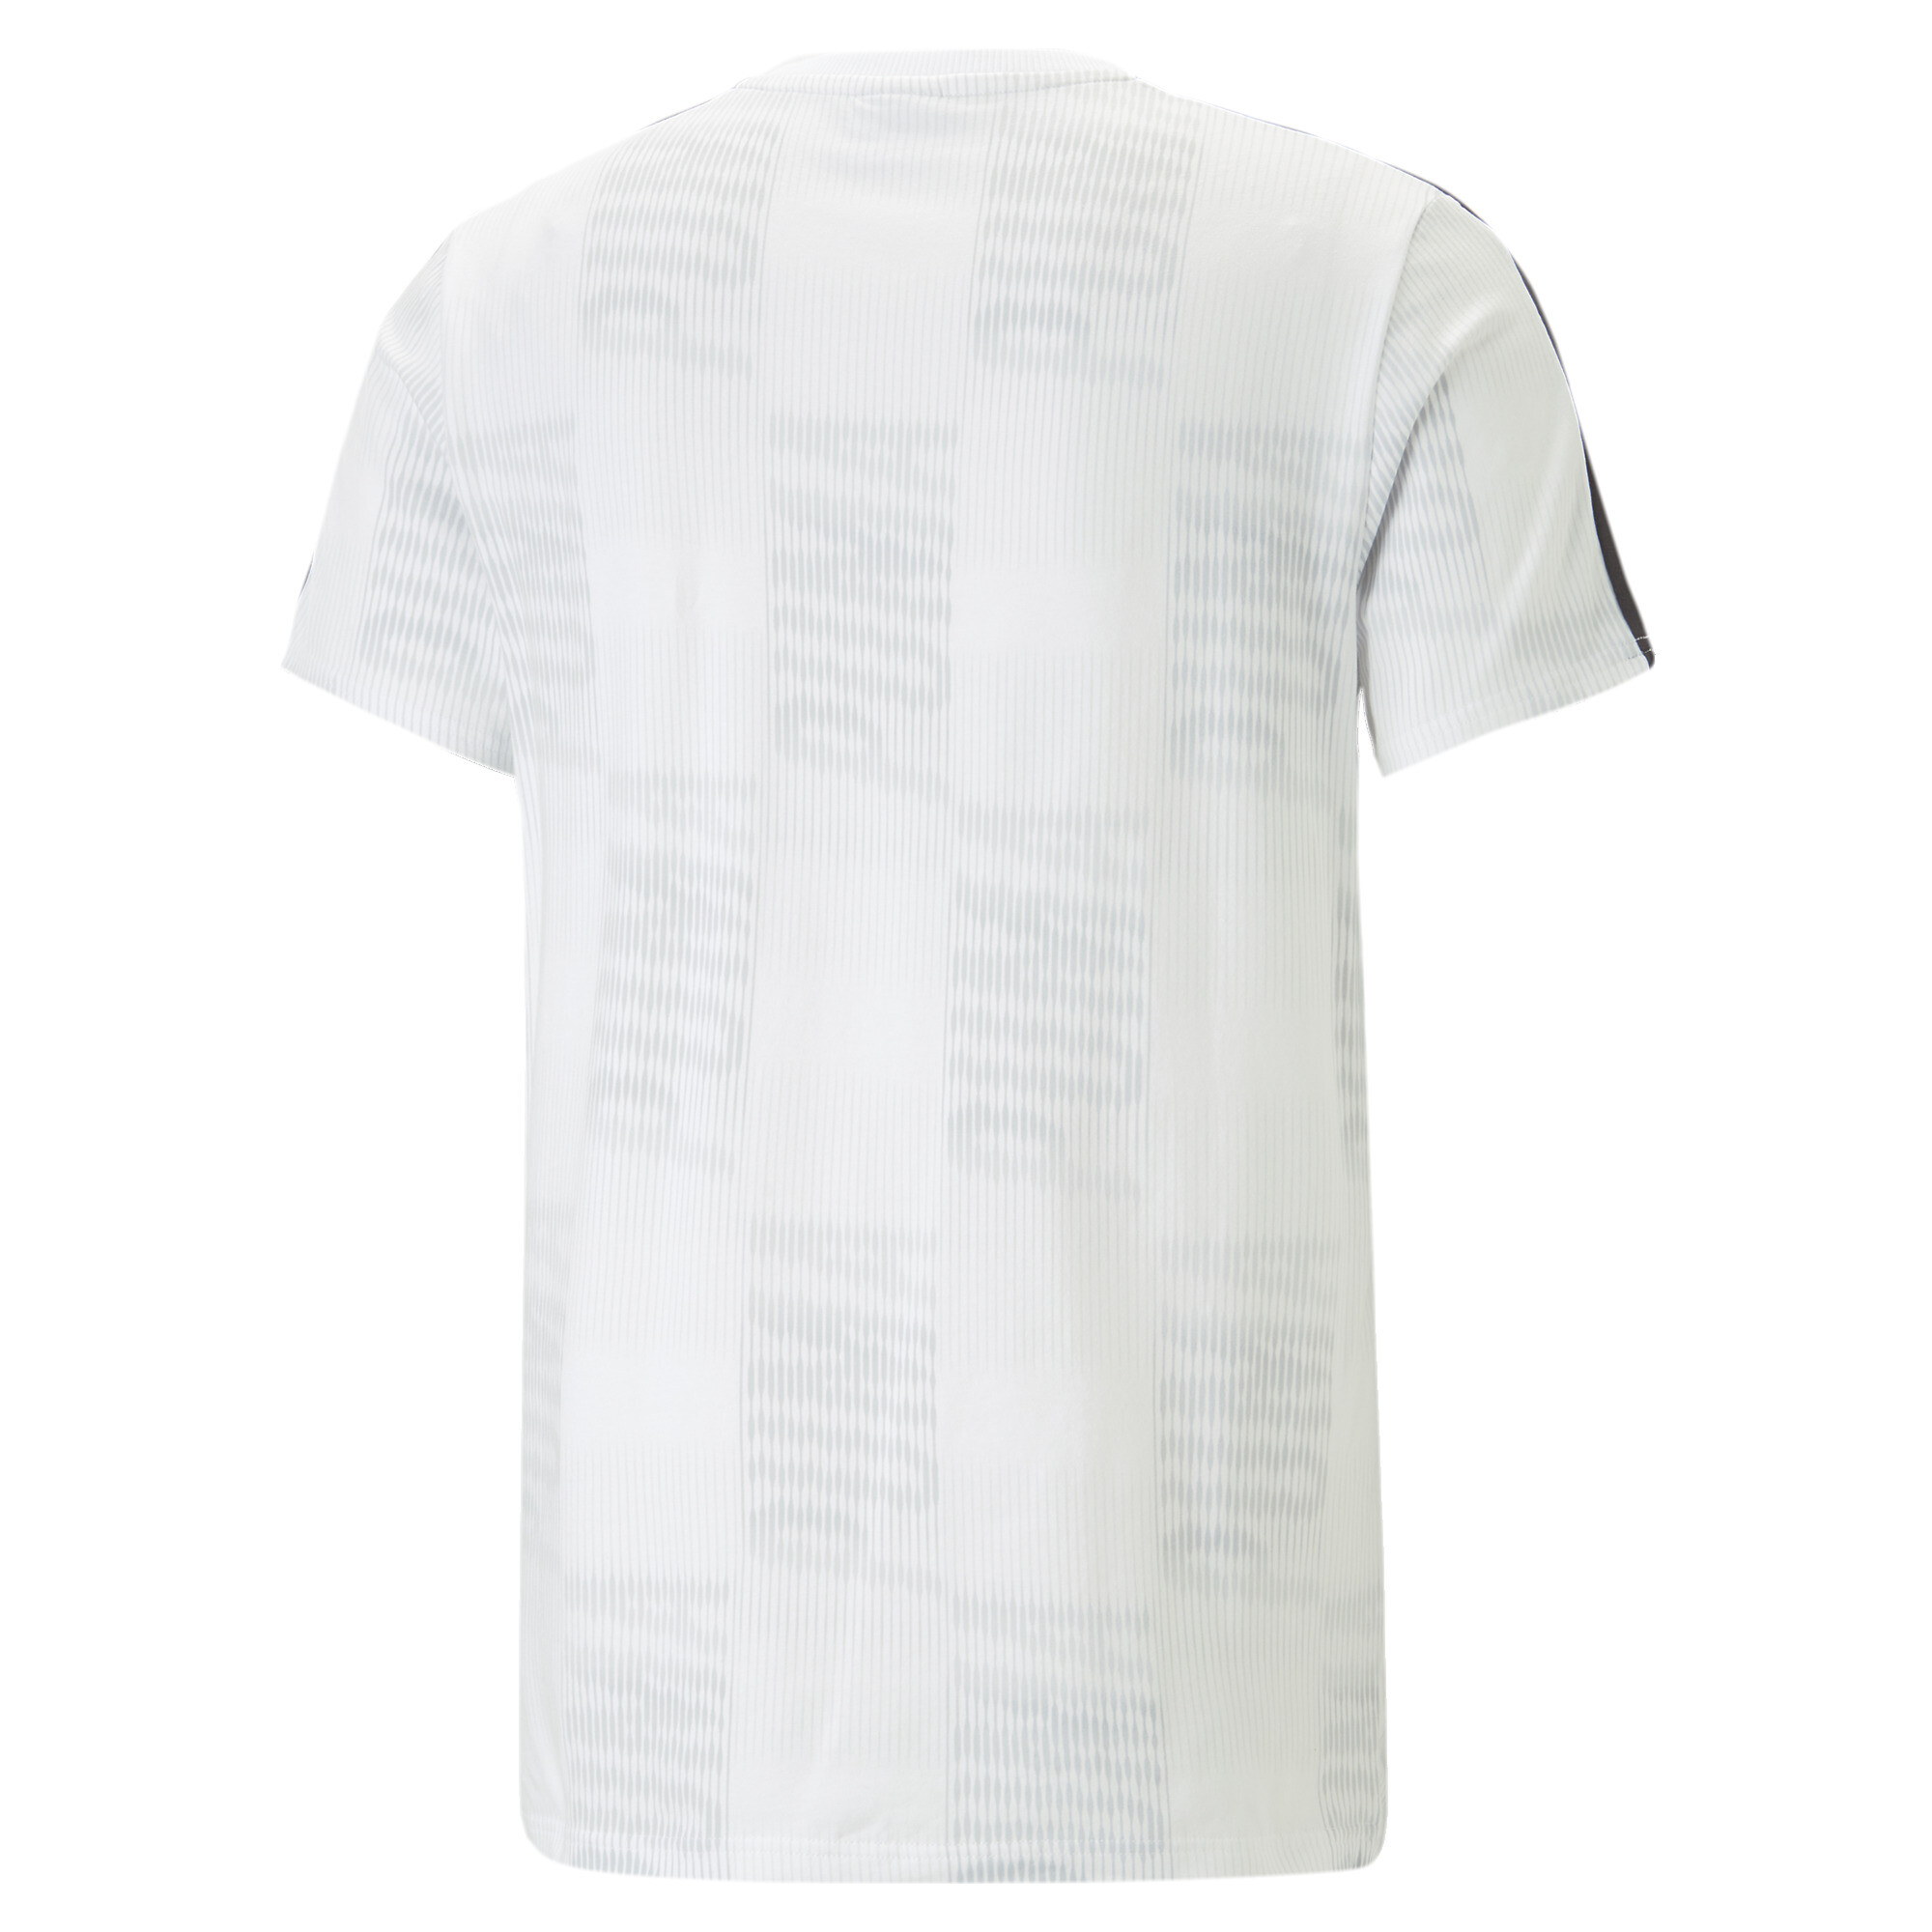 Men's PUMA T7 Sport T-Shirt Men In 20 - White, Size Large